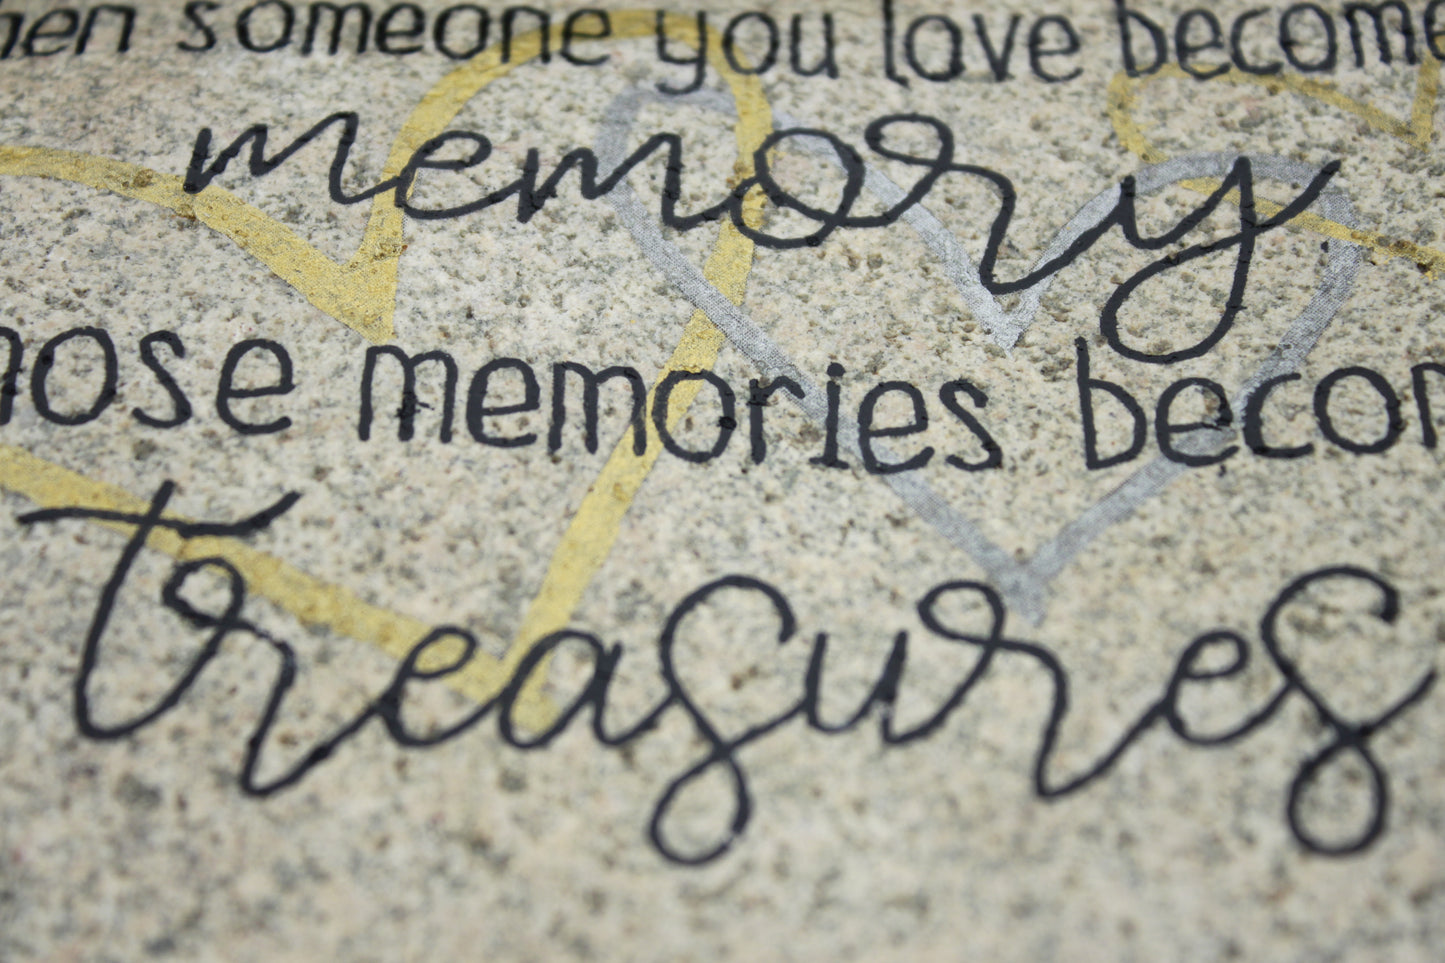 Personalized Large Memorial Stone - Memories Become Treasures